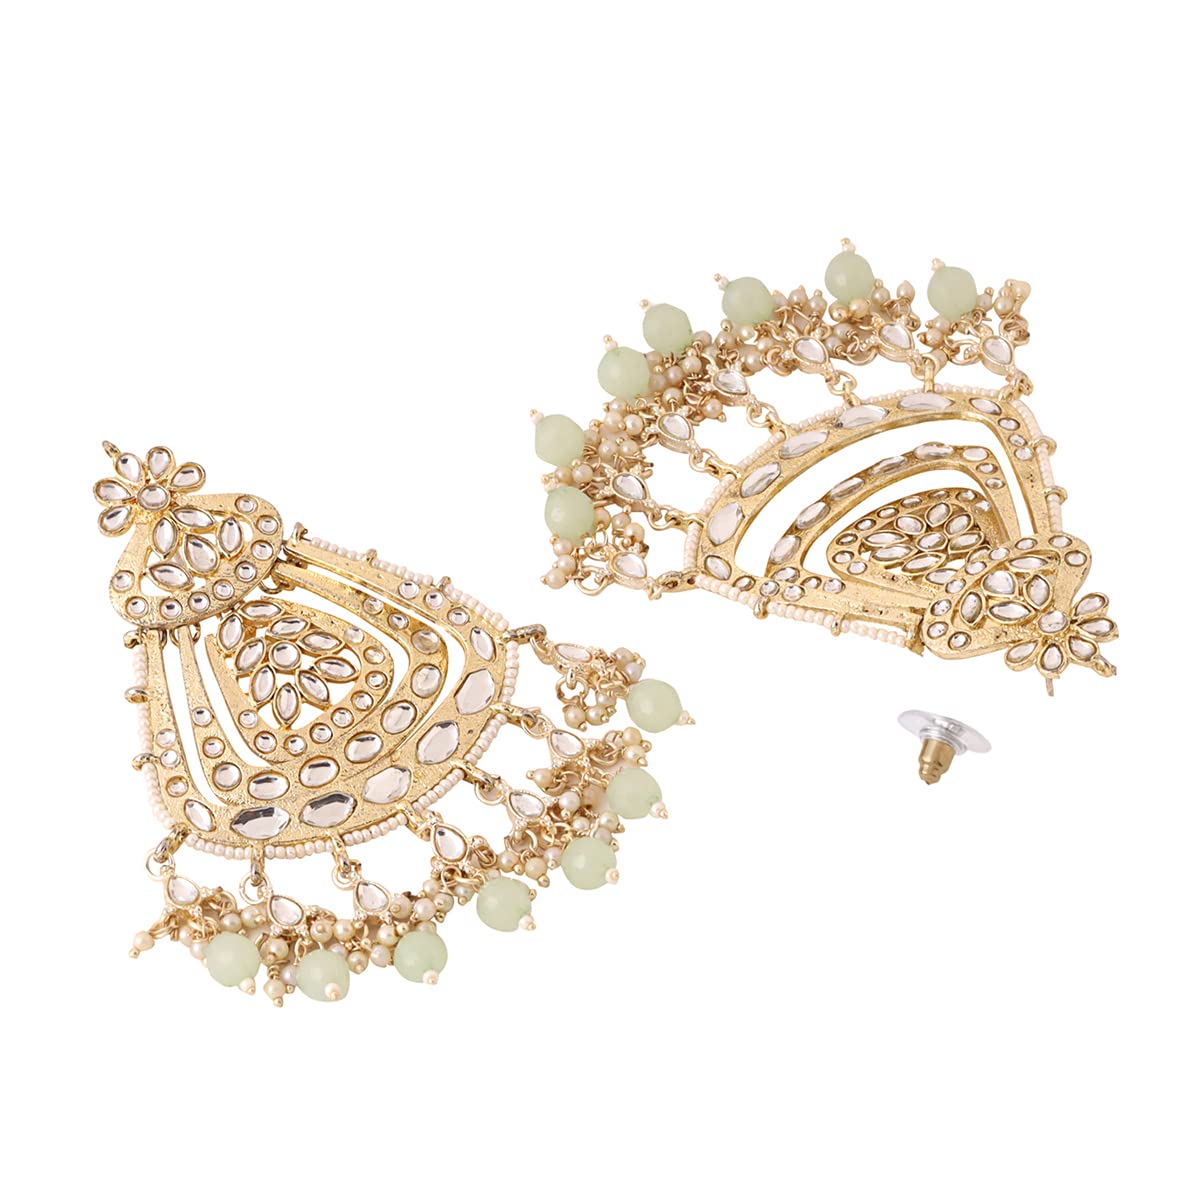 Yellow Chimes Earrings for Women and Girls Chandbali Earrings | Gold Toned Kundan Stone Chand Baliyan Earrings | Birthday Gift for girls and women Anniversary Gift for Wife